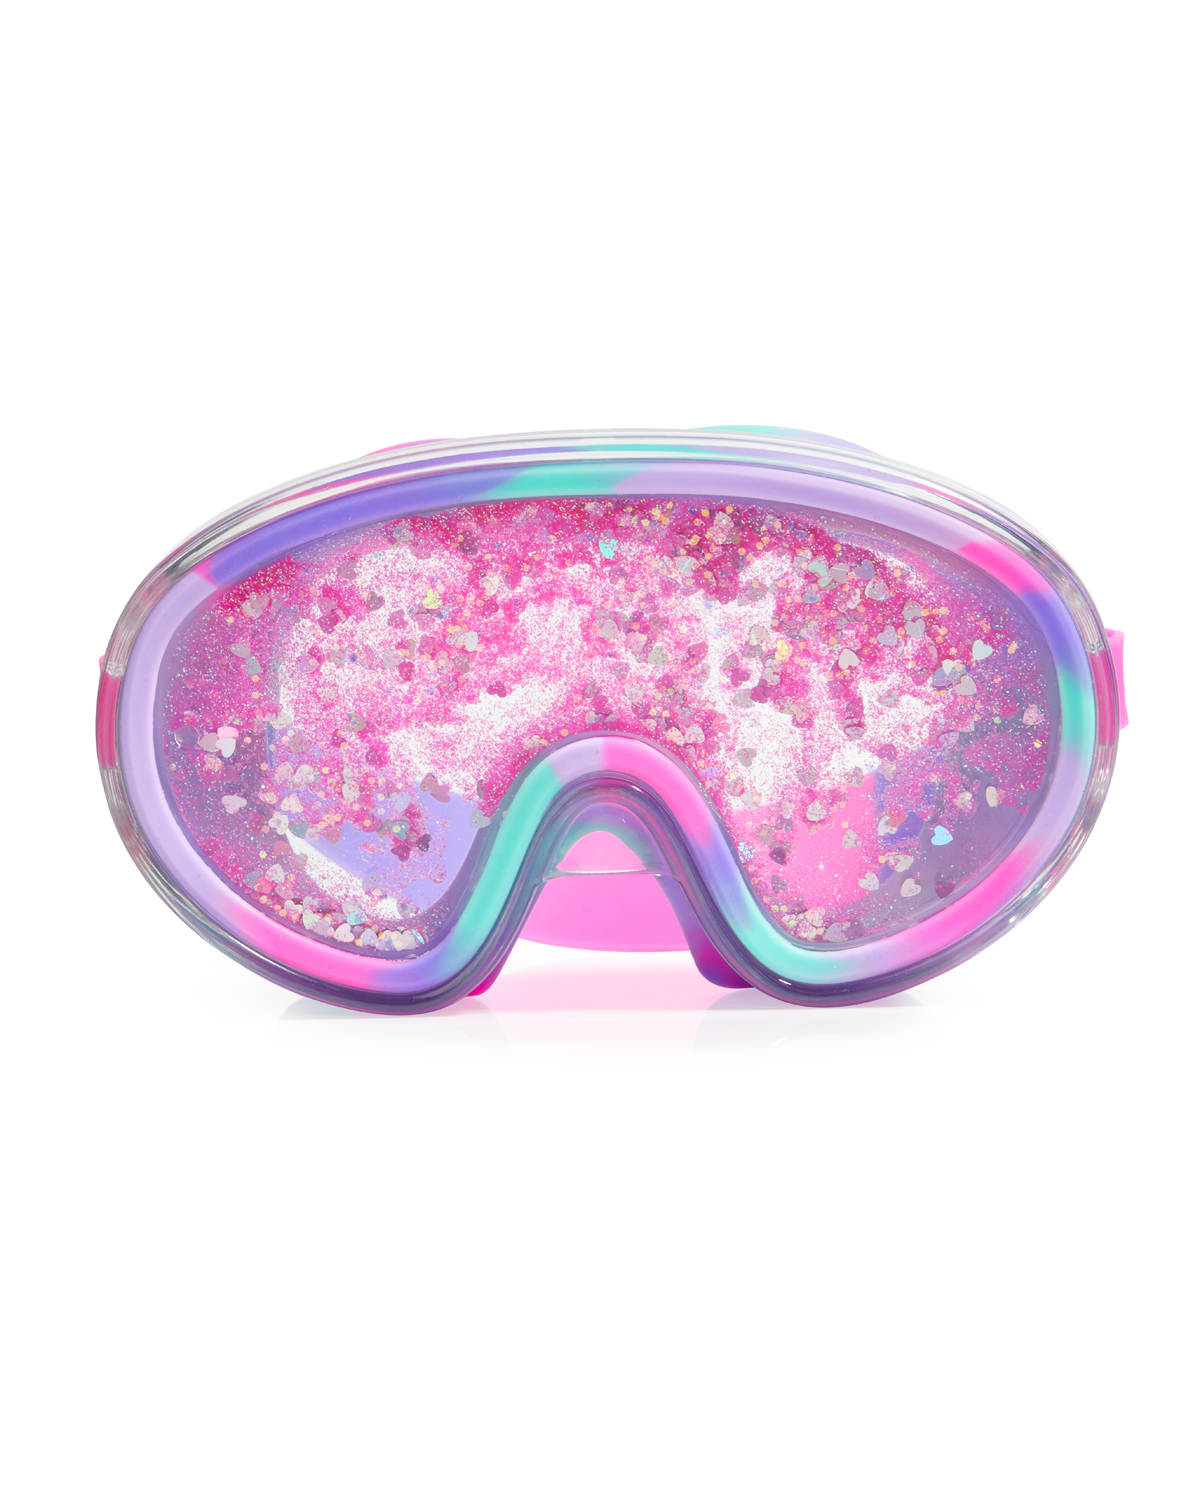 Bling2o Beach Life Glitter Confetti Swim Mask